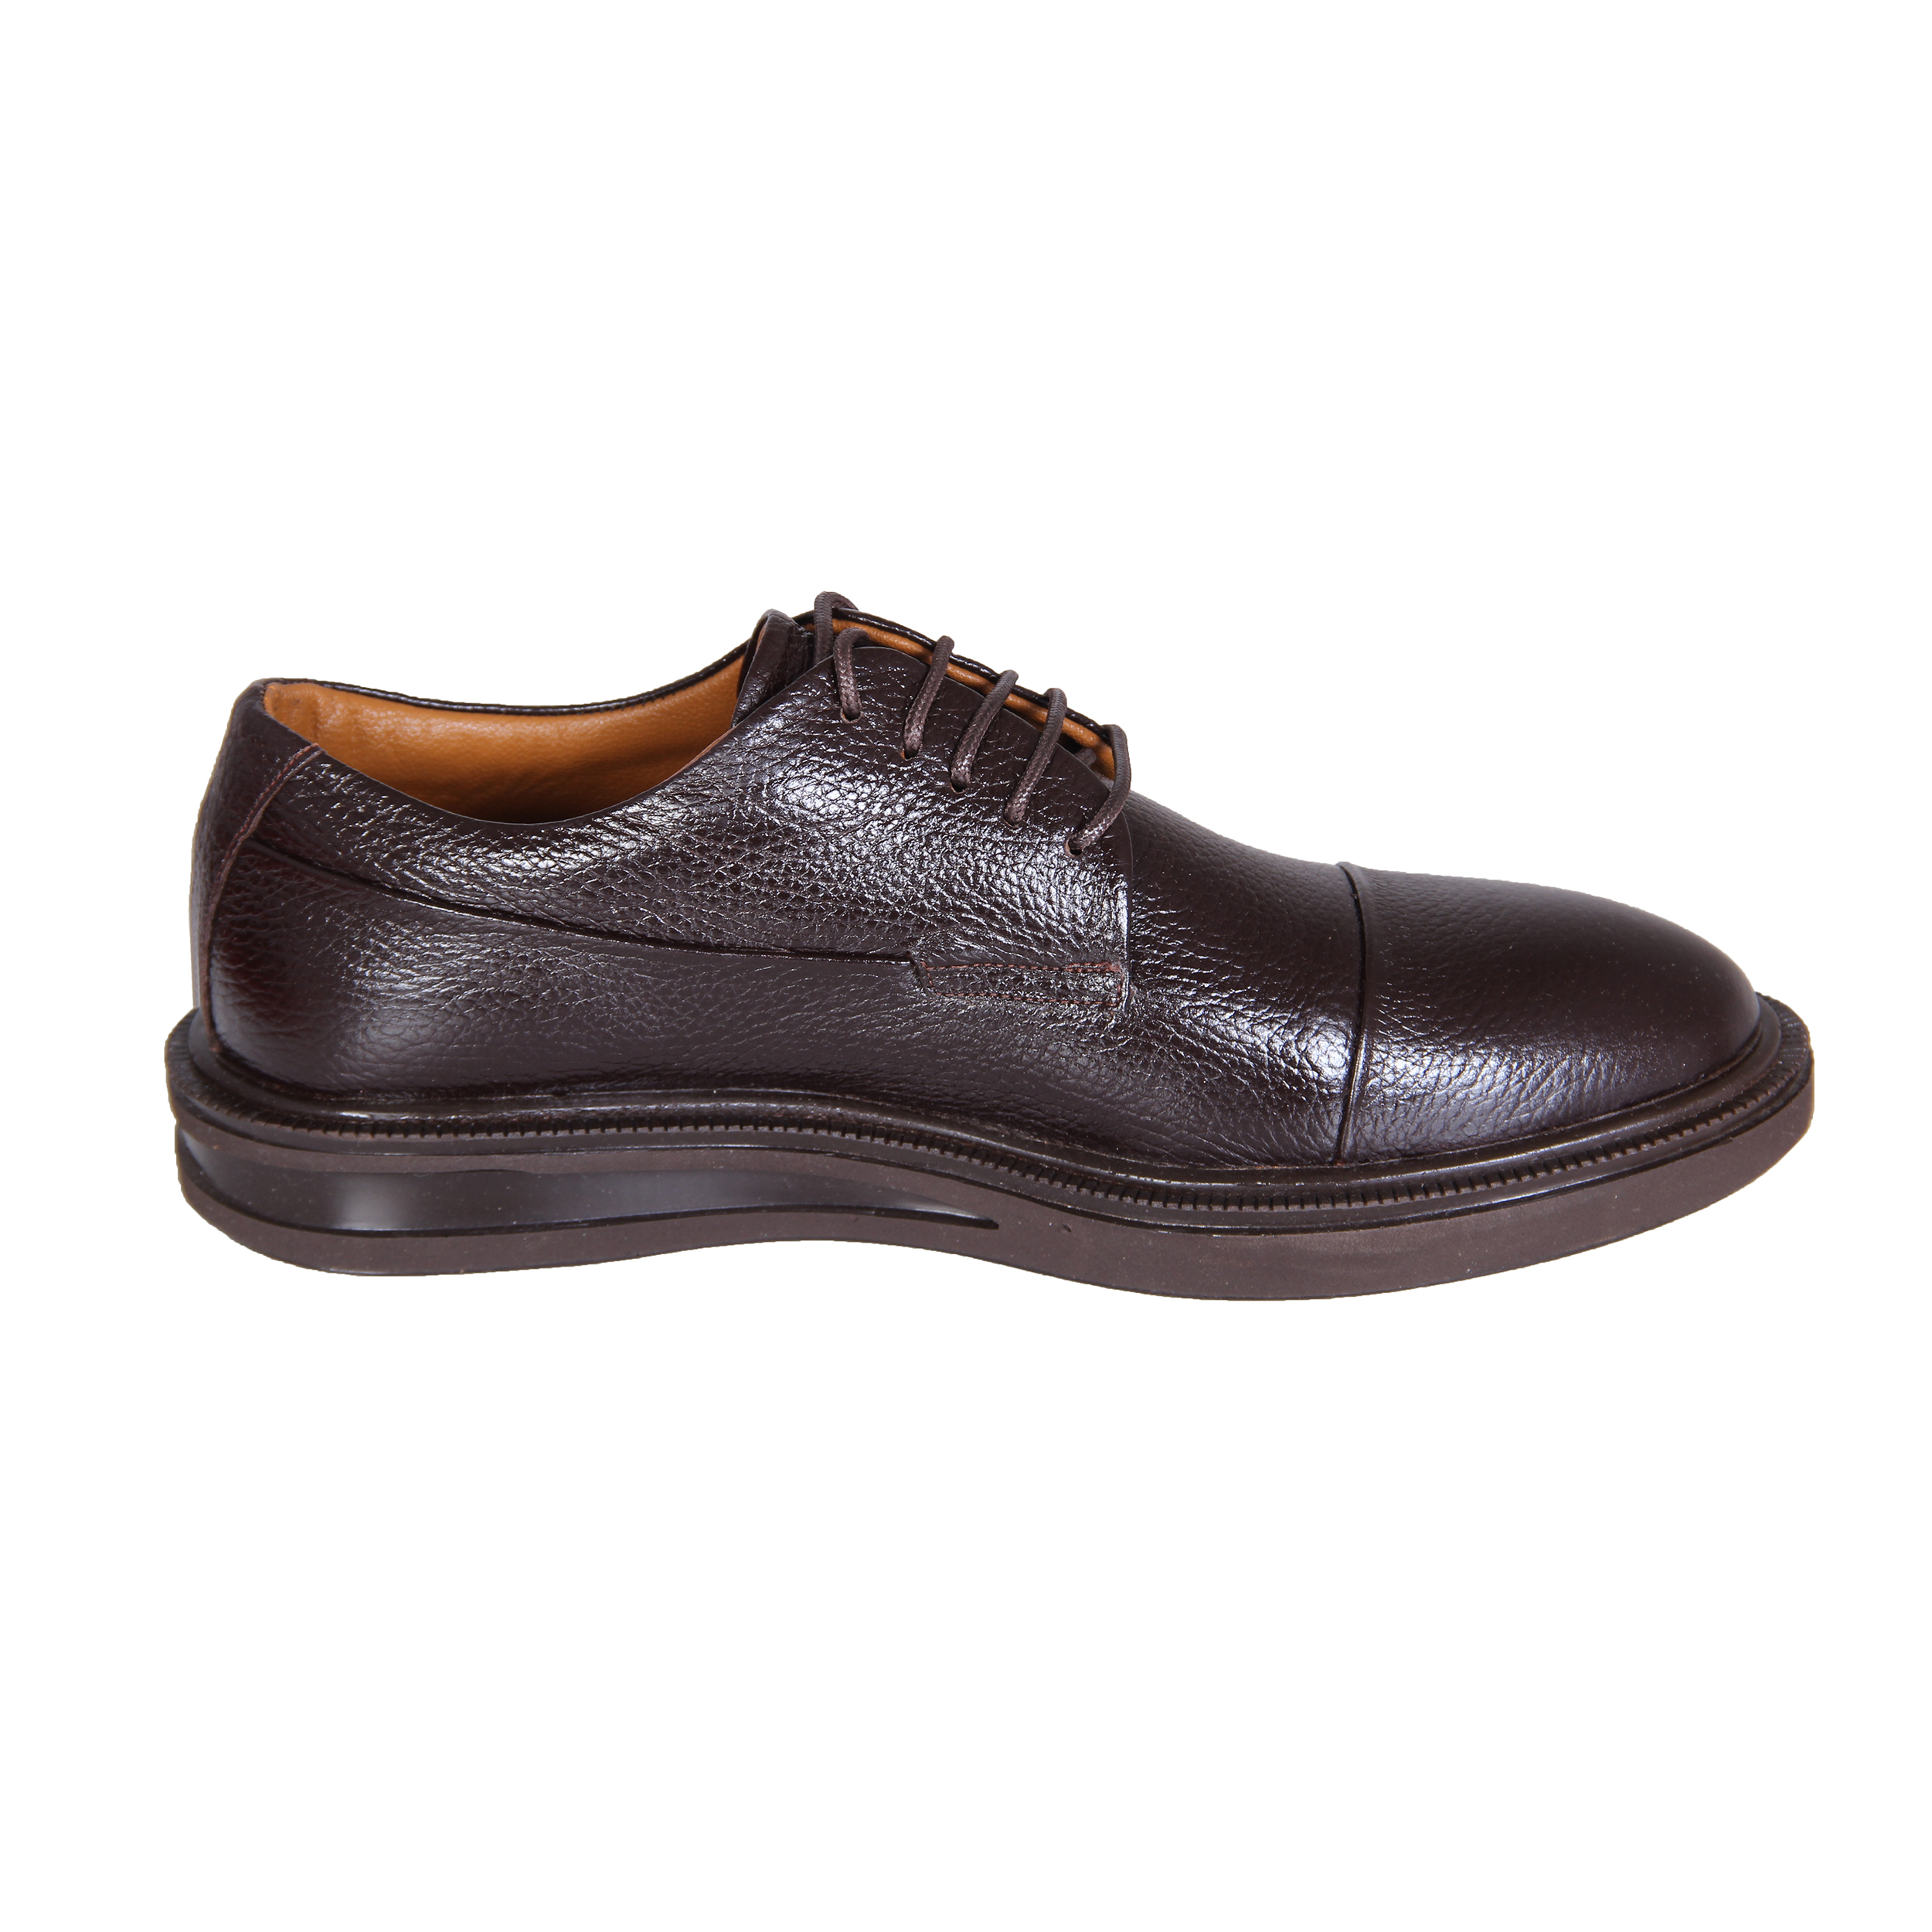 SHAHRECHARM leather men's casual shoes , GH1092-3 Model